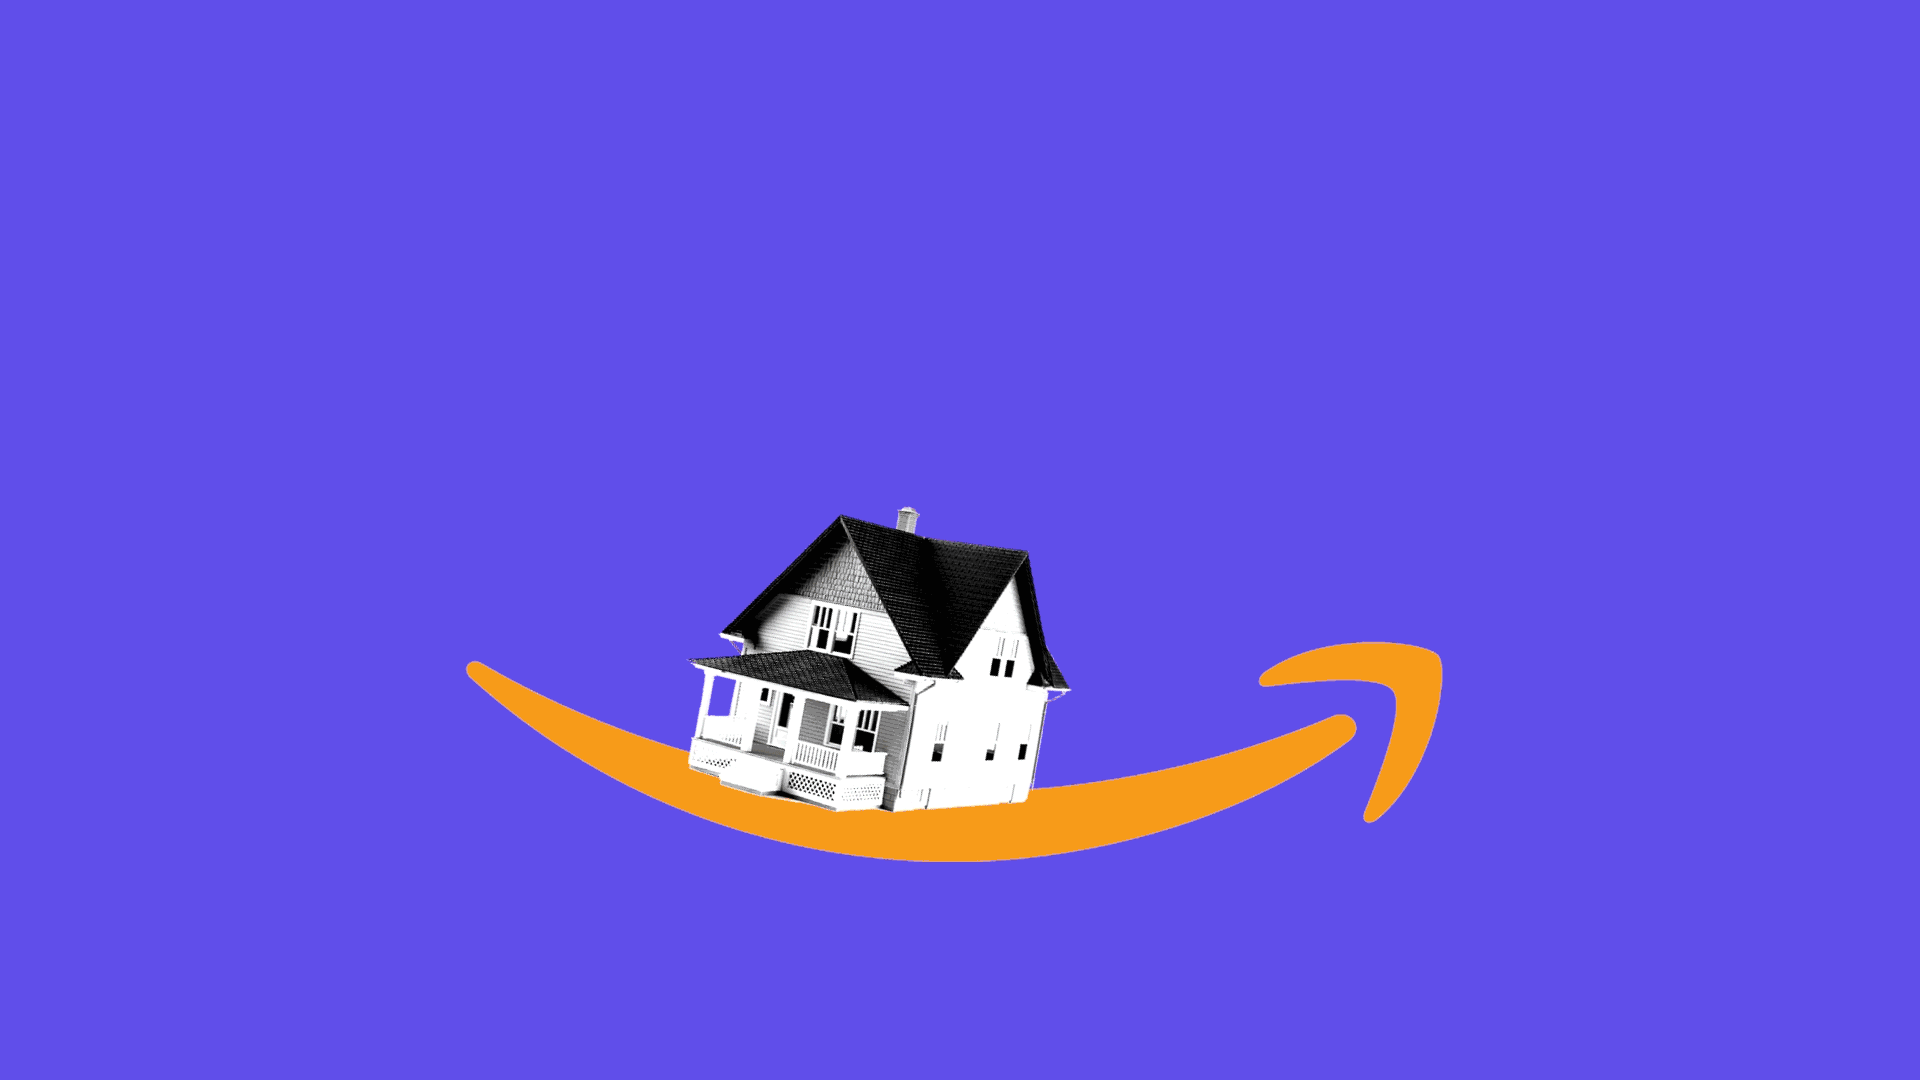 Illustration of house jumping off Amazon logo